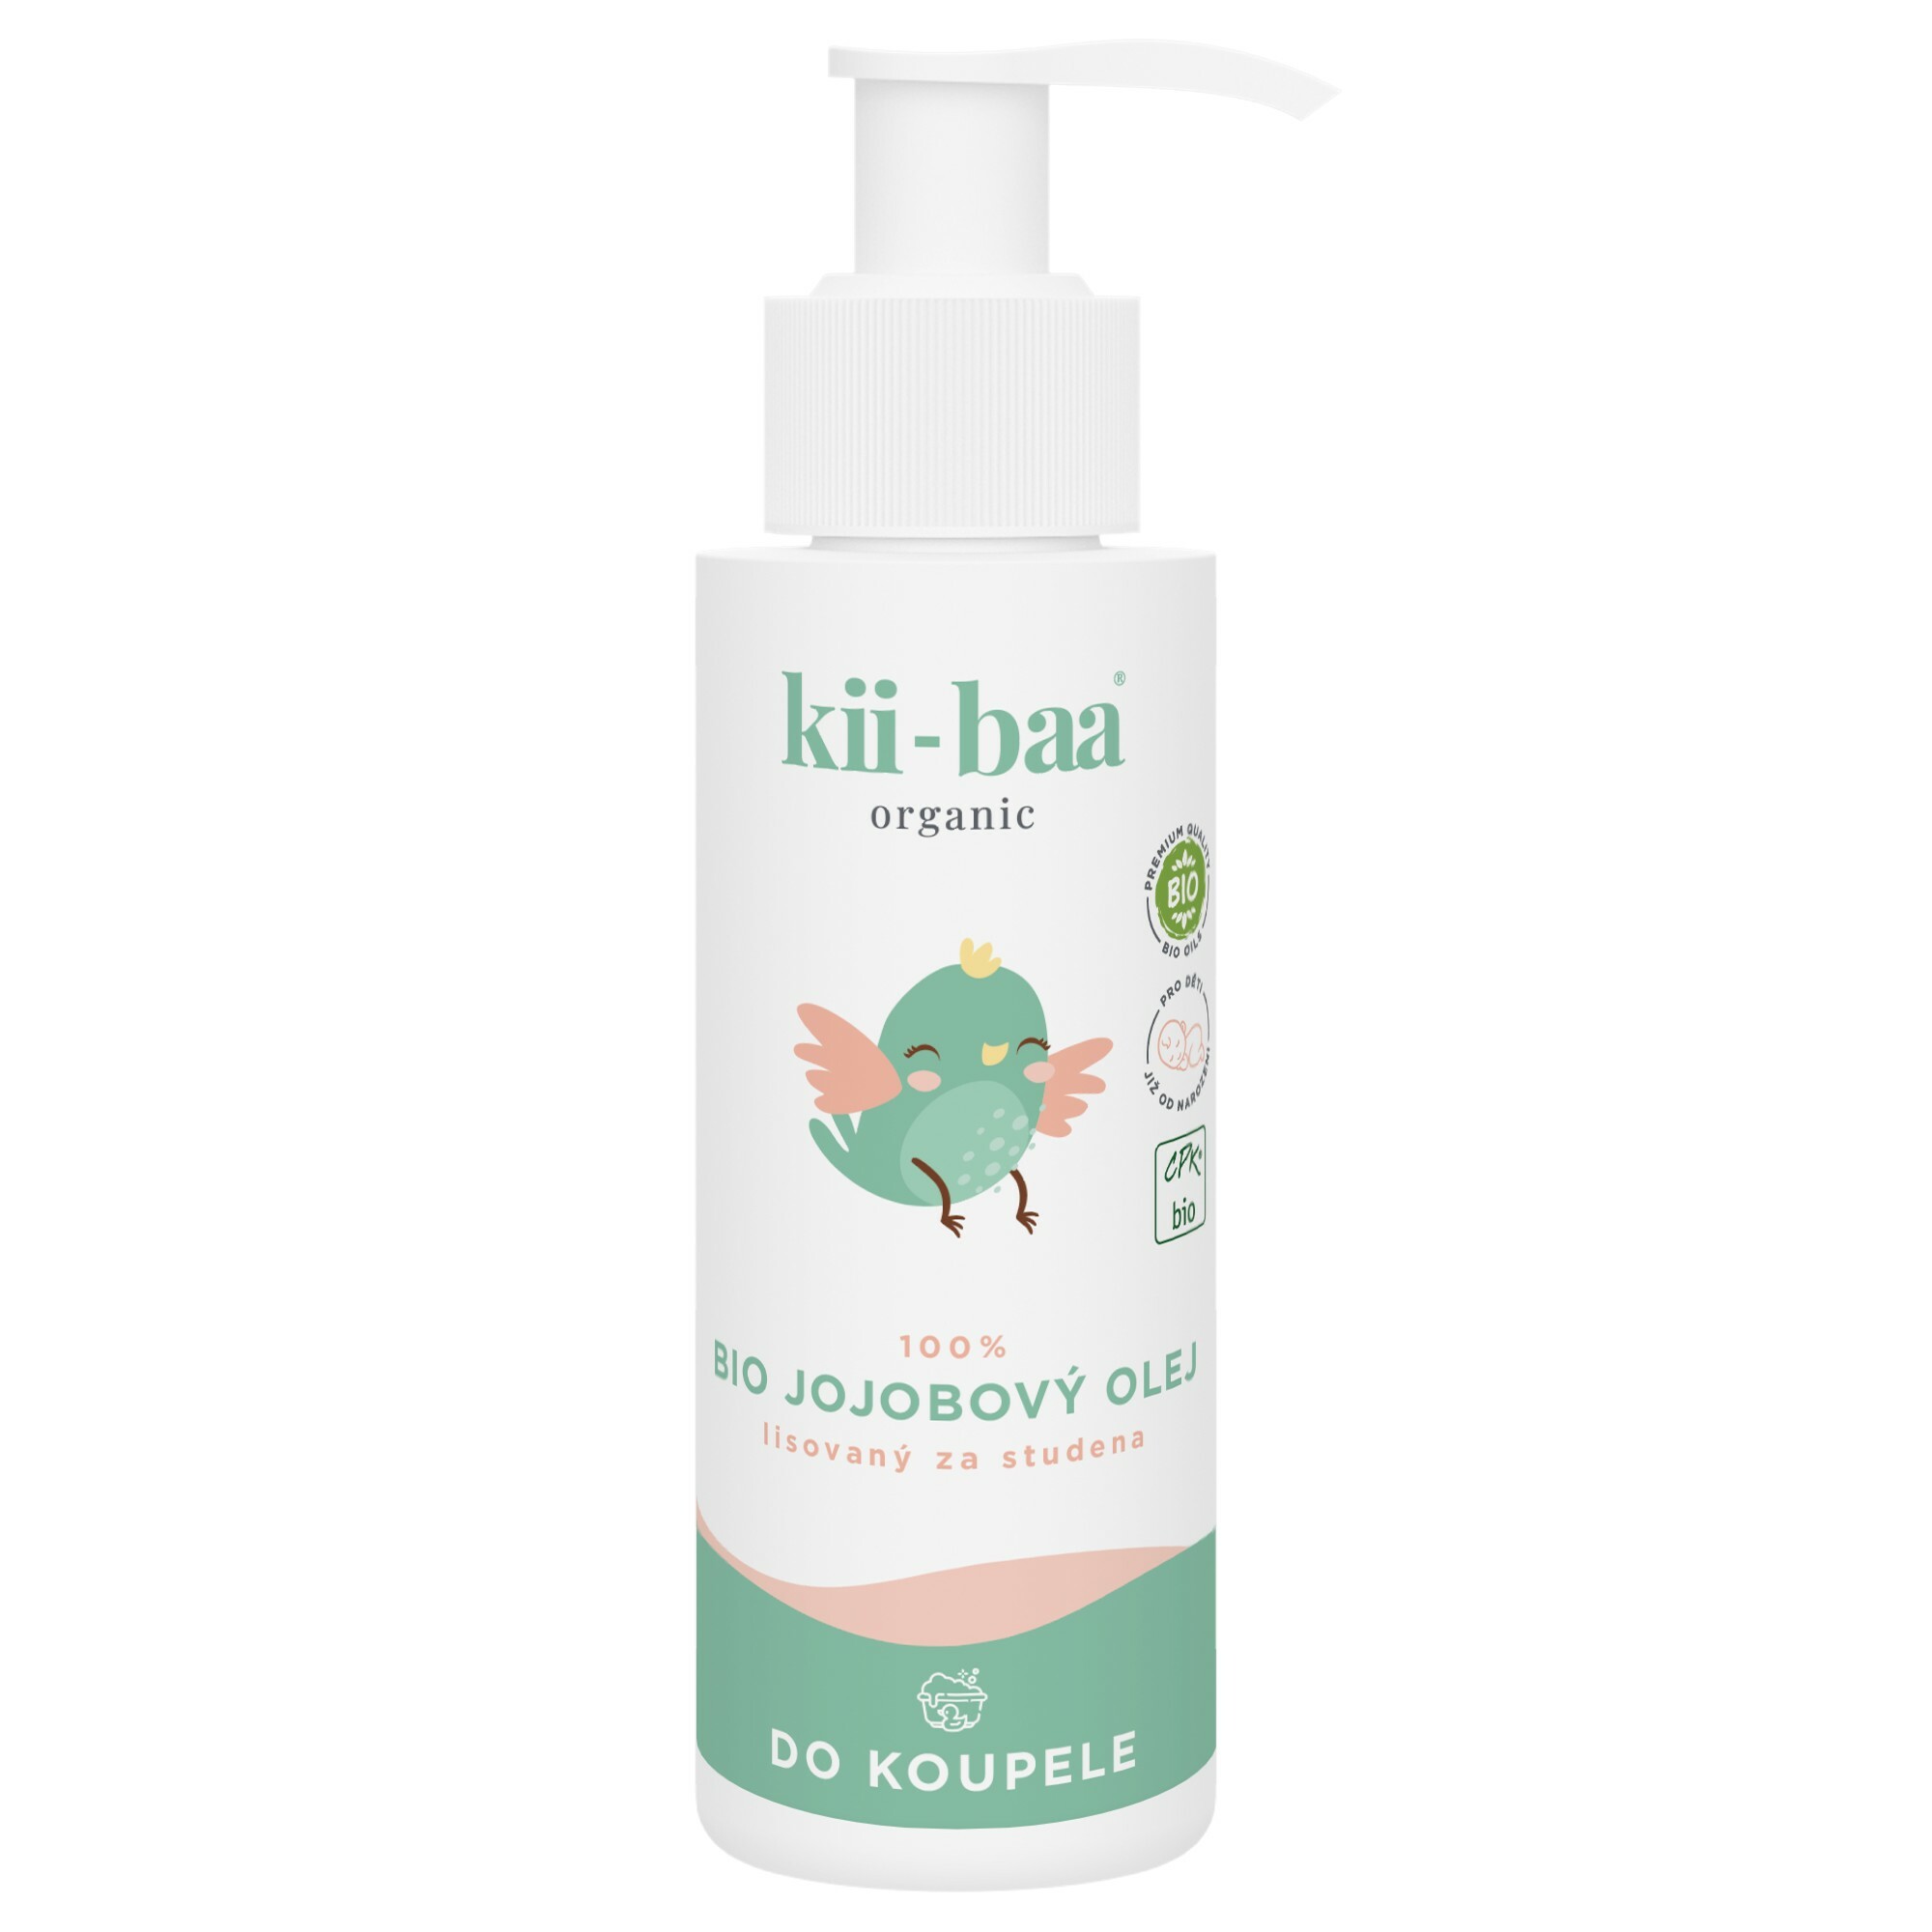 Levně kii-baa organic Bio jojobový olej do koupele 100 ml